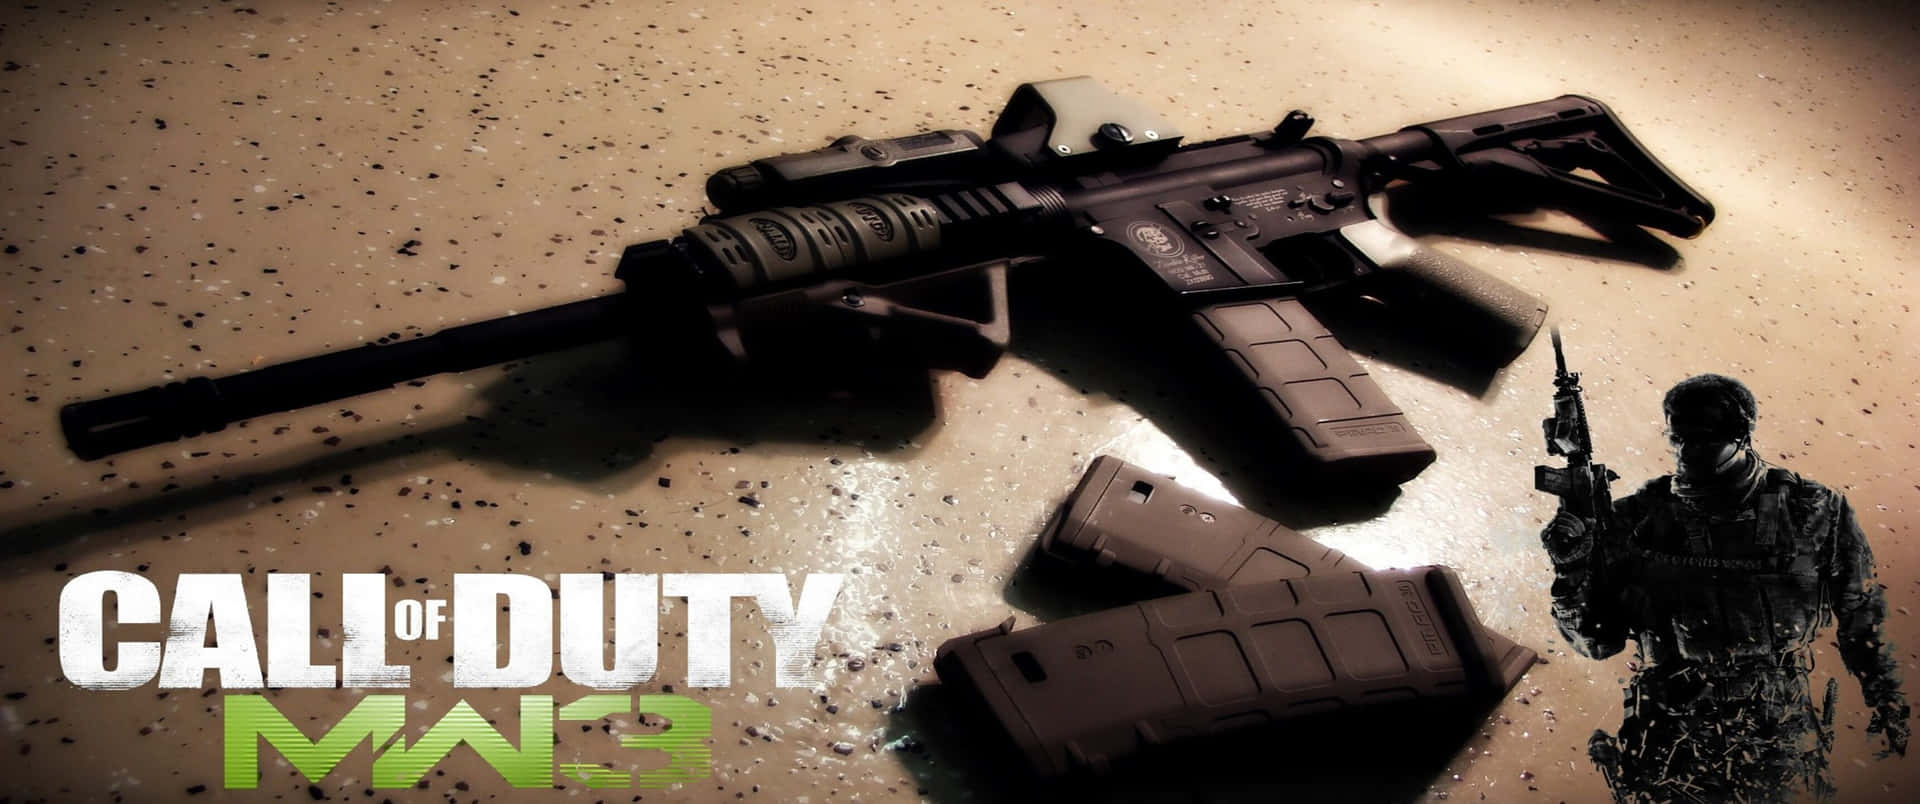 Snipermagazine 3440x1440p Call Of Duty Modern Warfare Bakgrund.